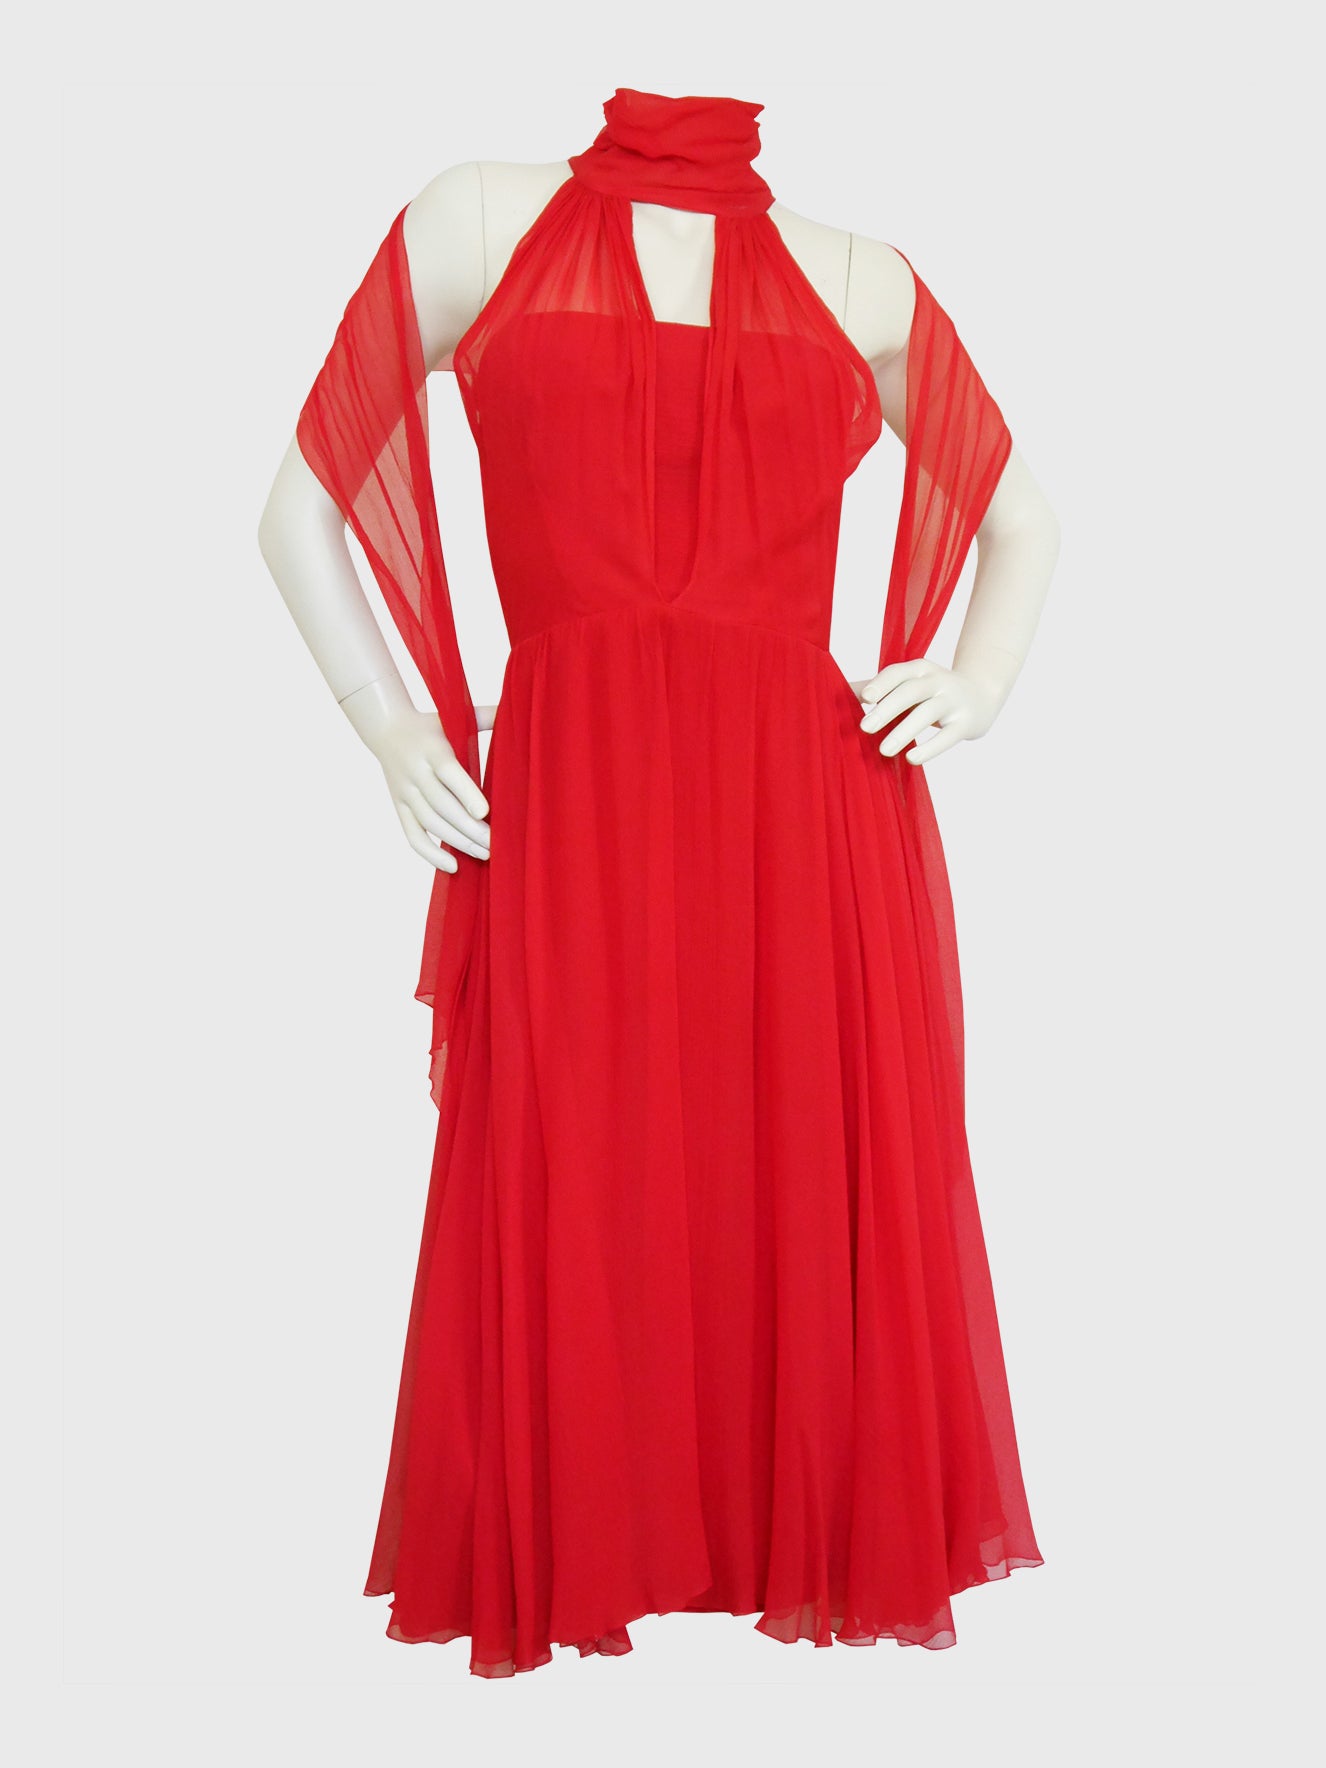 NINA RICCI Vintage Couture Red Silk Chiffon Evening Dress w/ Royal Provenance